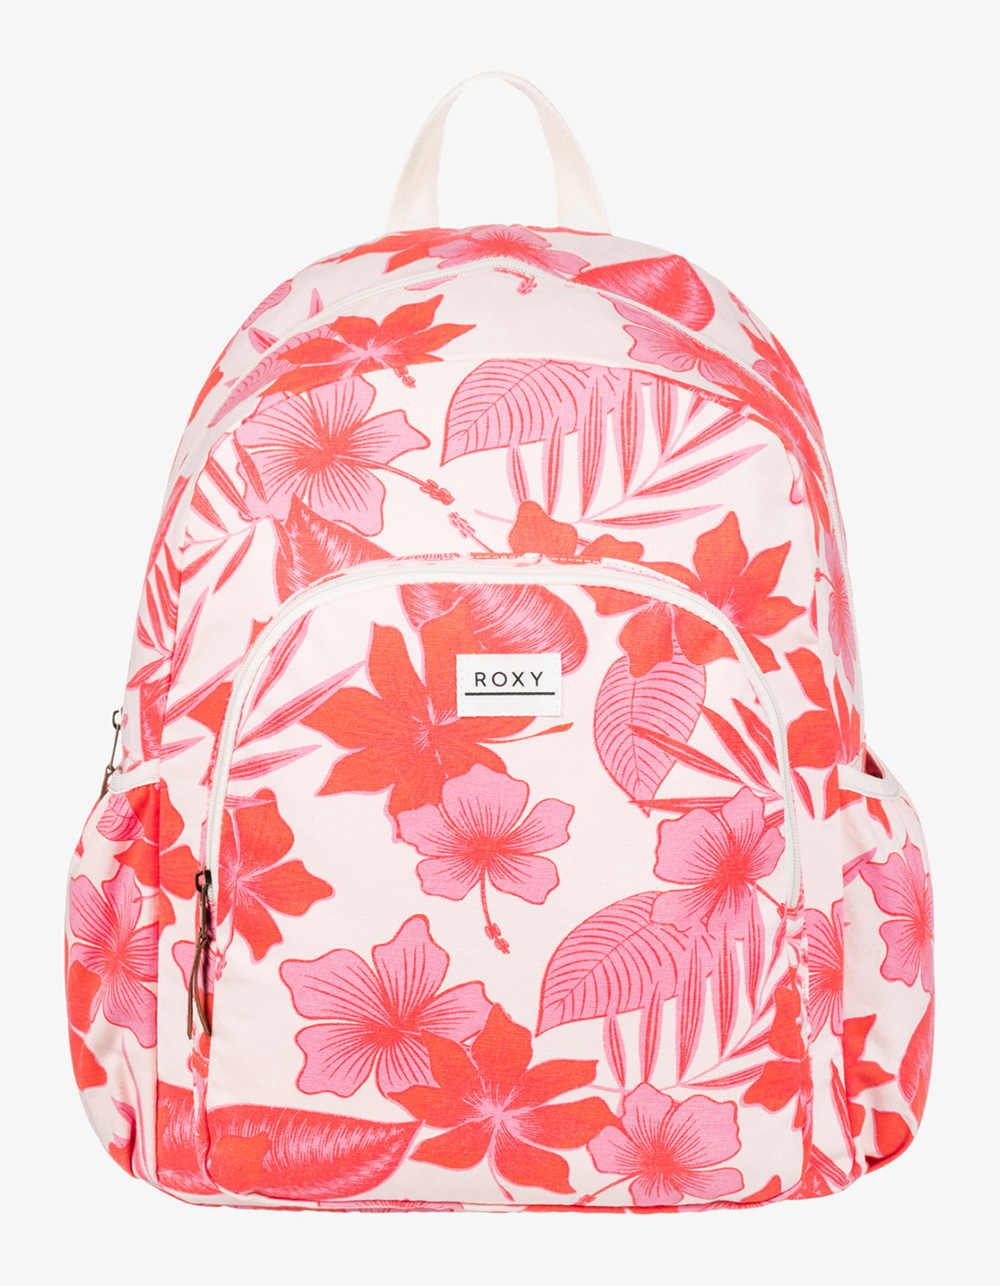 Women's Pink Backpacks